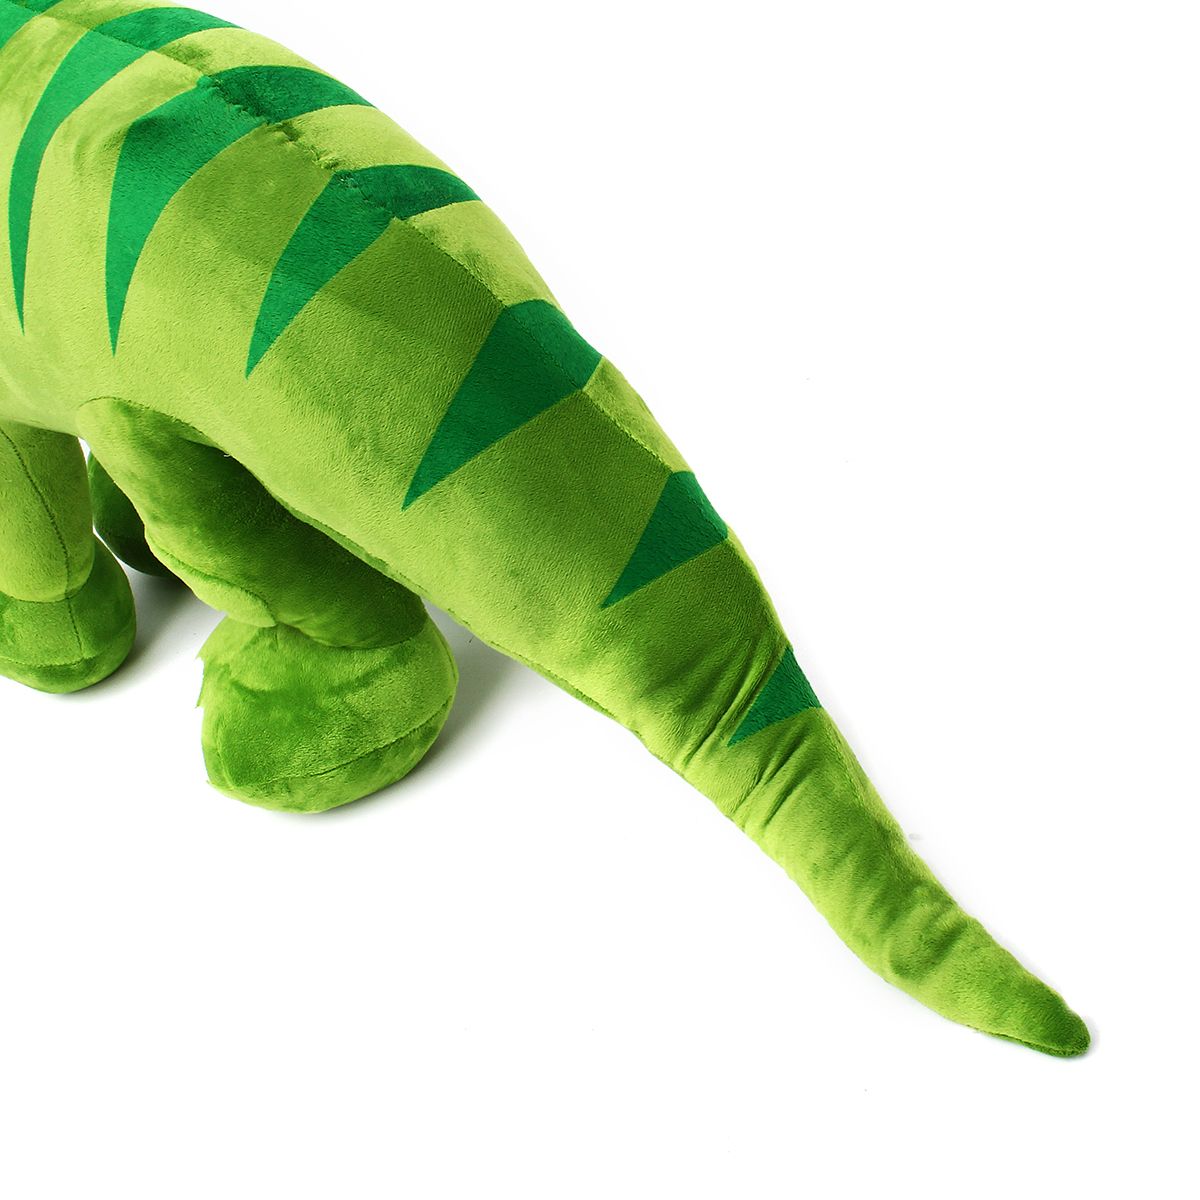 BlueGreen-Dinosaur-Doll-Plush-Cute-Large-Toys-Animal-Stuffed-Soft-Pillow-Baby-Kids-Gift-1557192